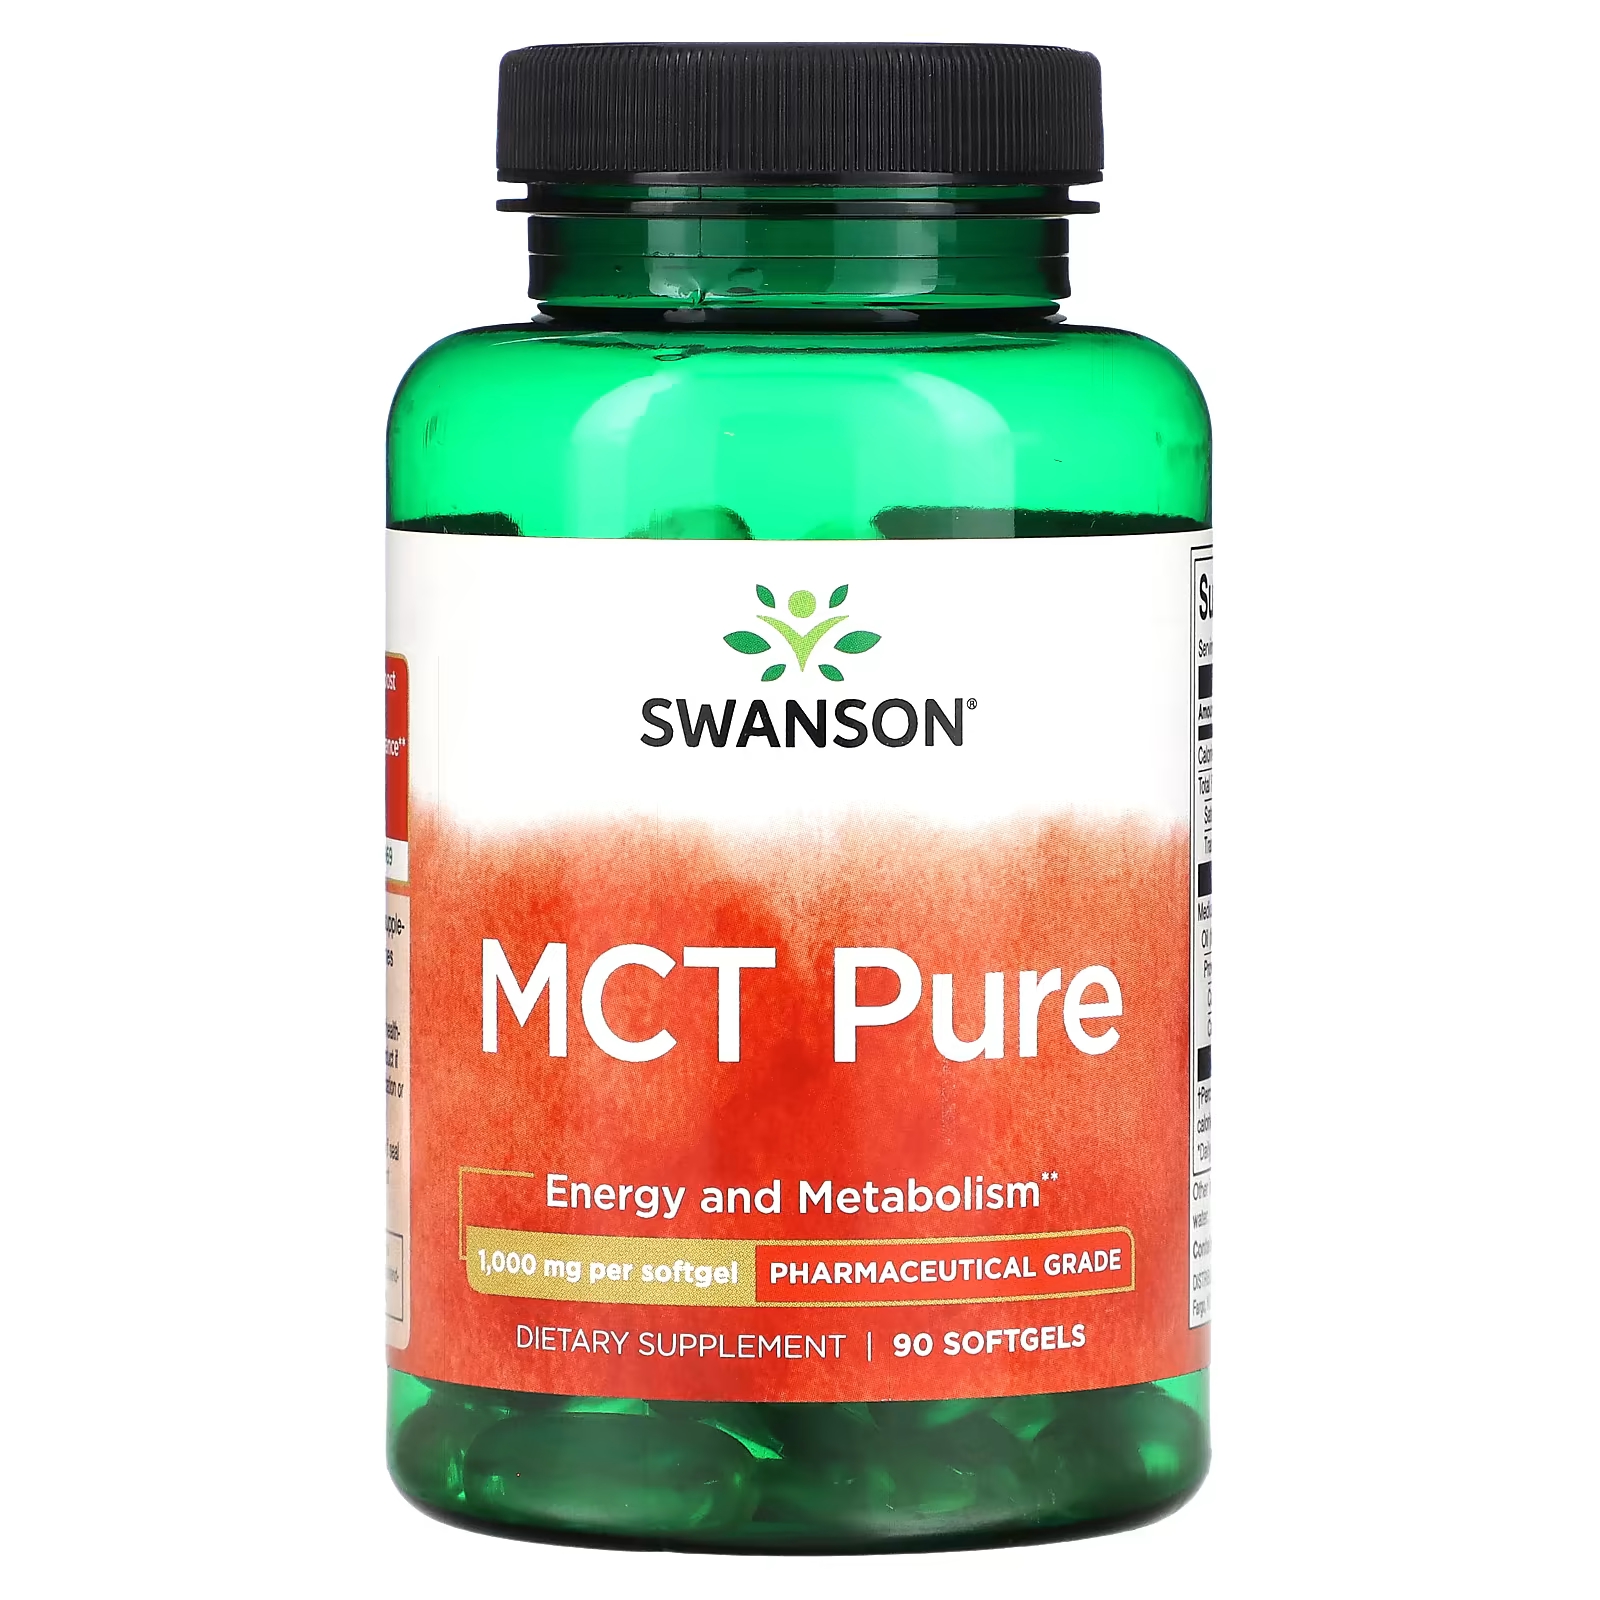 Пищевая добавка Swanson MCT Pure 1000 мг, 90 мягких таблеток пищевая добавка swanson mct pure 1000 мг 90 мягких таблеток